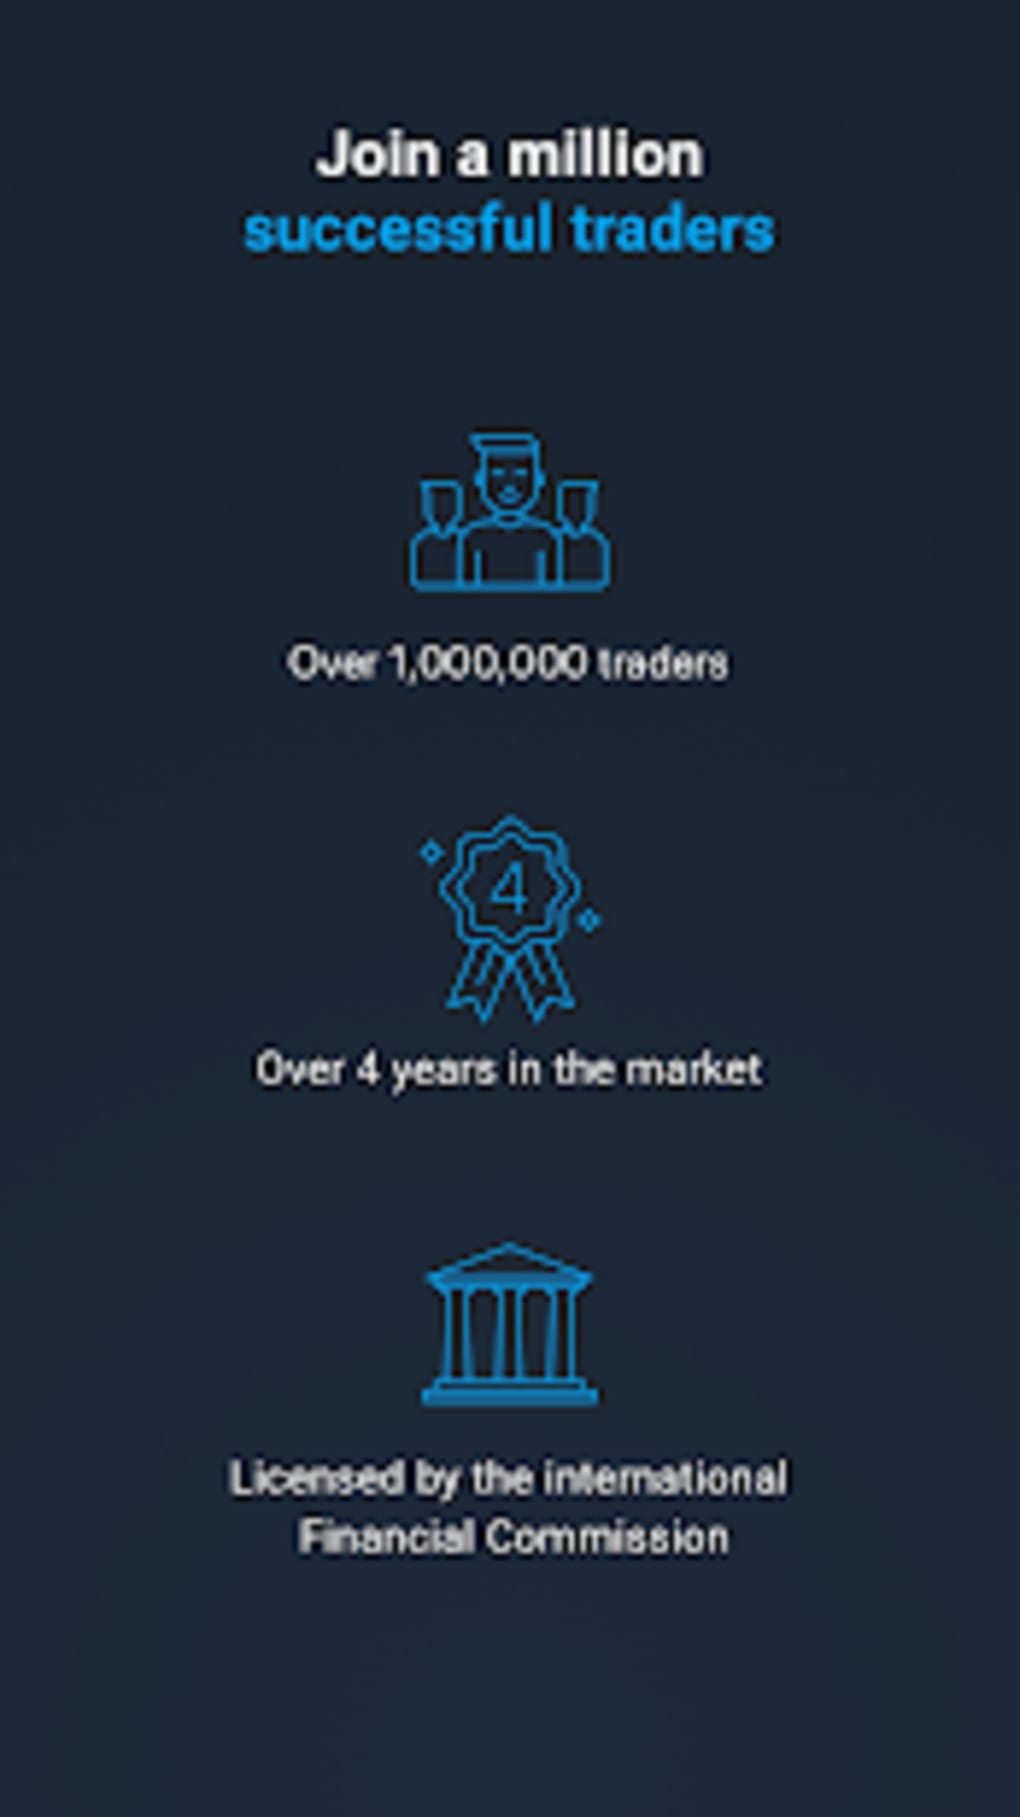 olymp trade online trading app